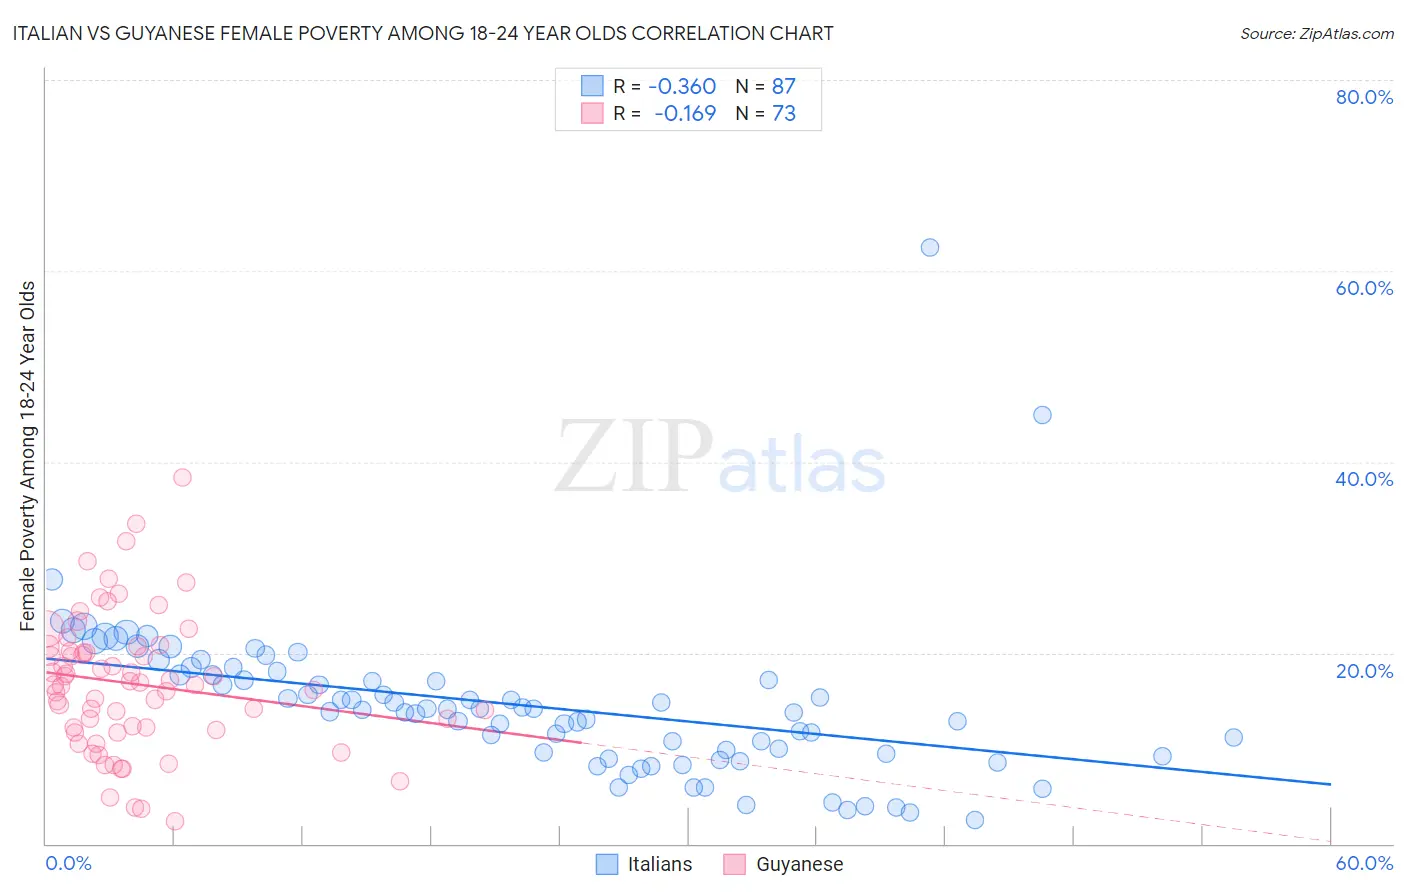 Italian vs Guyanese Female Poverty Among 18-24 Year Olds